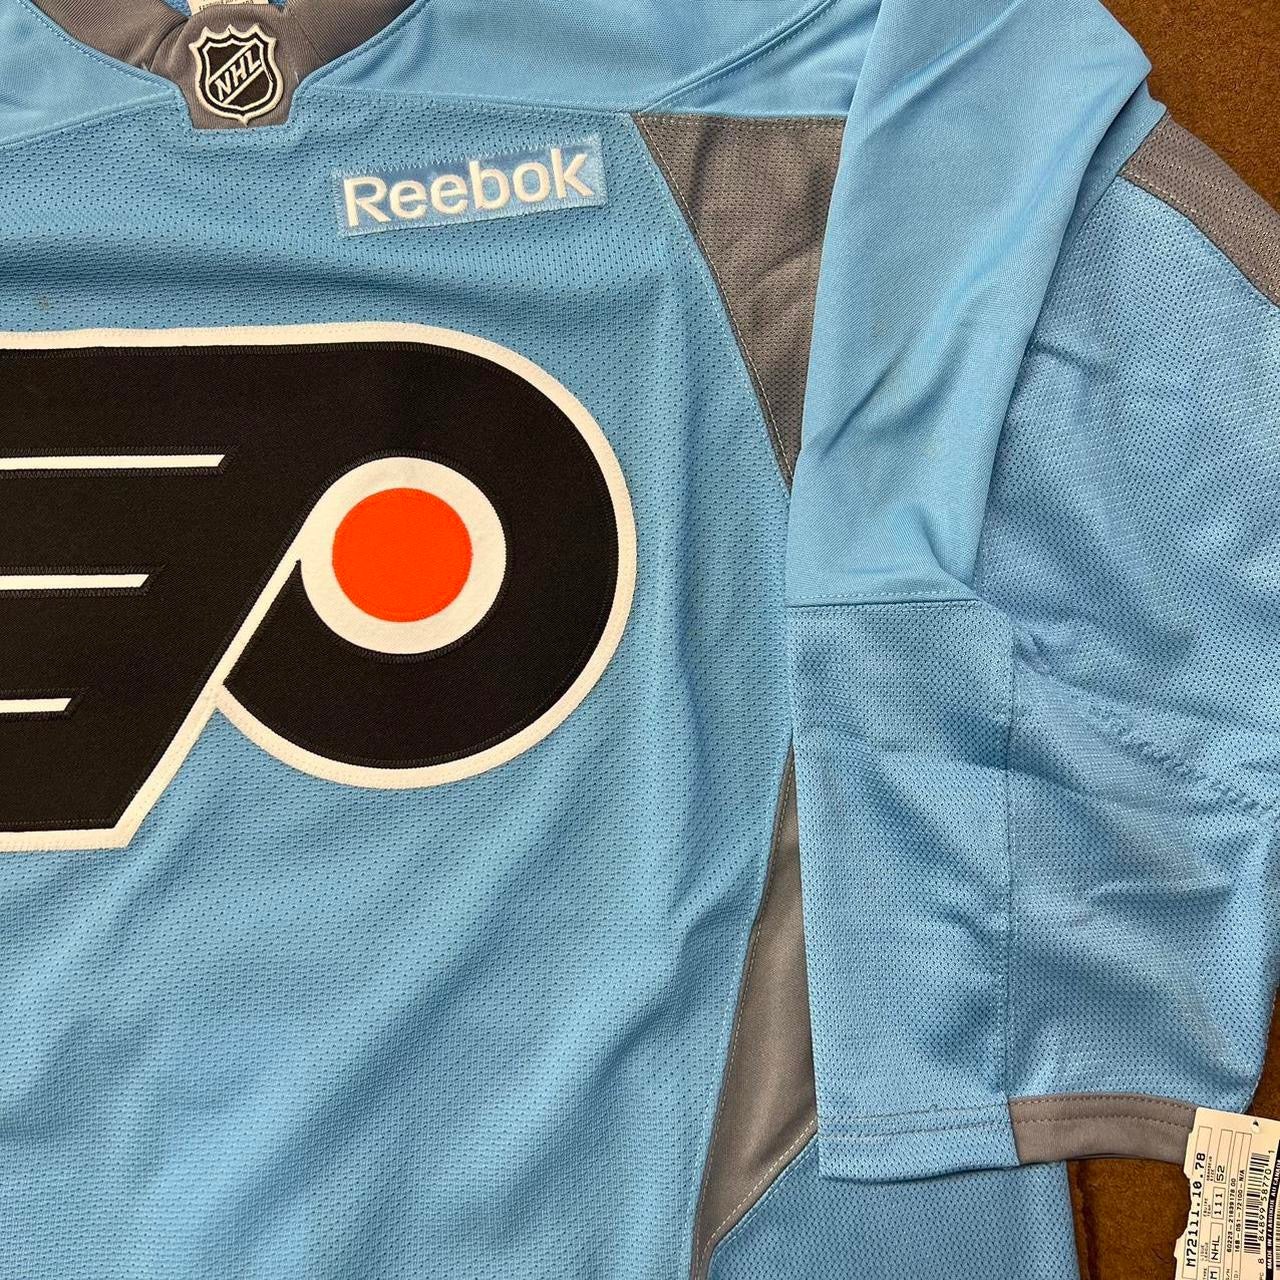 Carter Hart Autographed Philadelphia Flyers adidas Pro Jersey - NHL Auctions